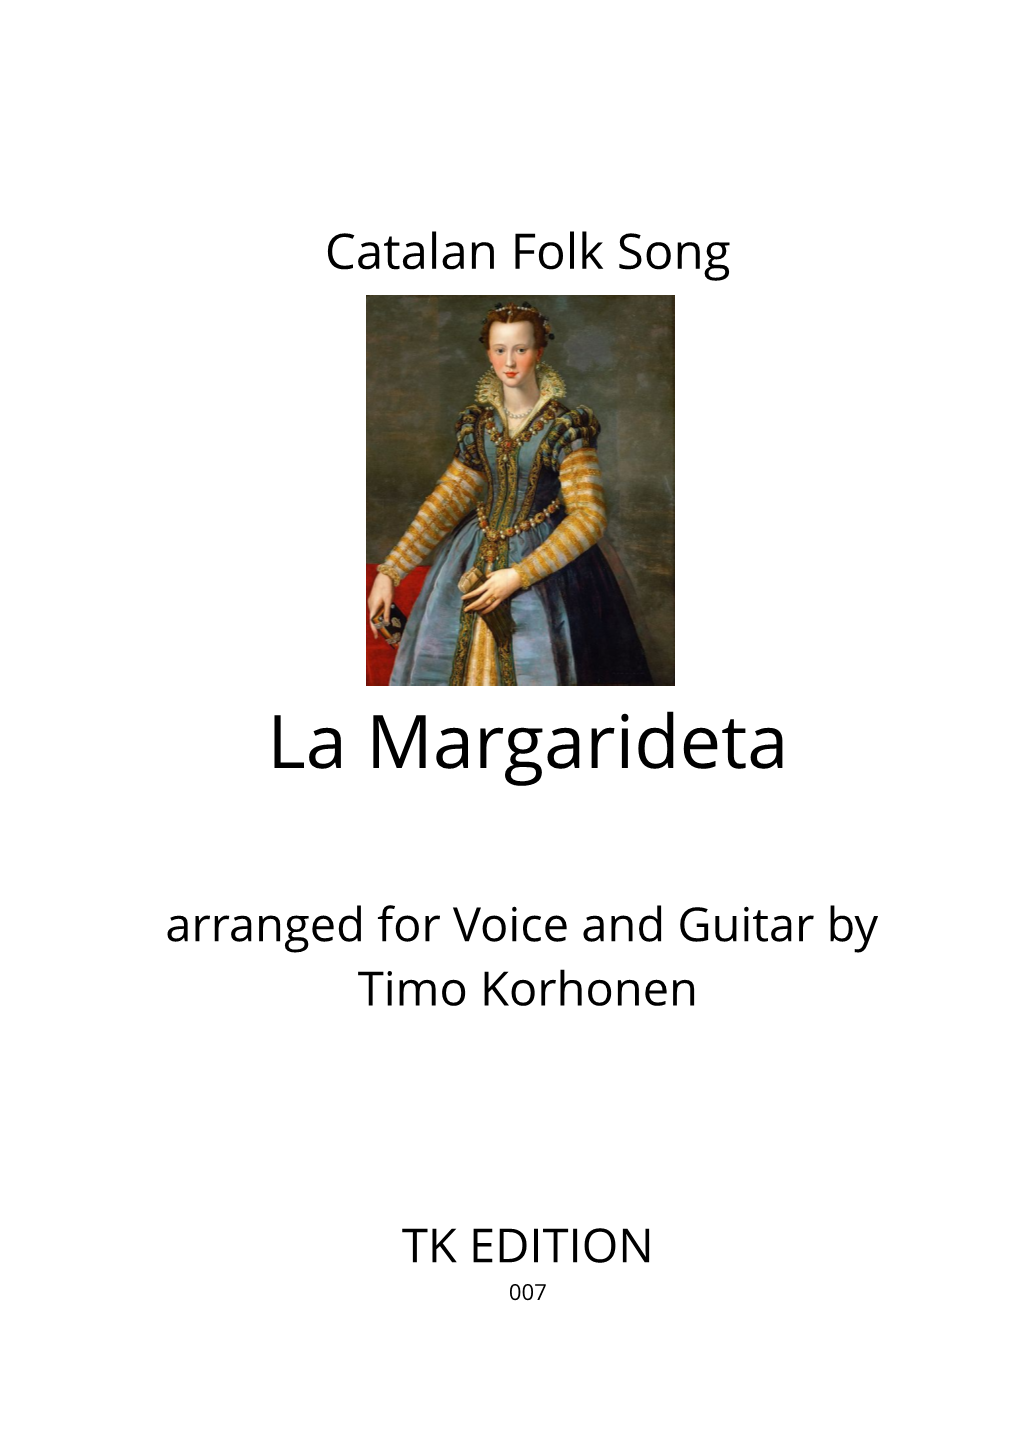 La Margarideta Arranged for Voice and Guitar by Timo Korhonen